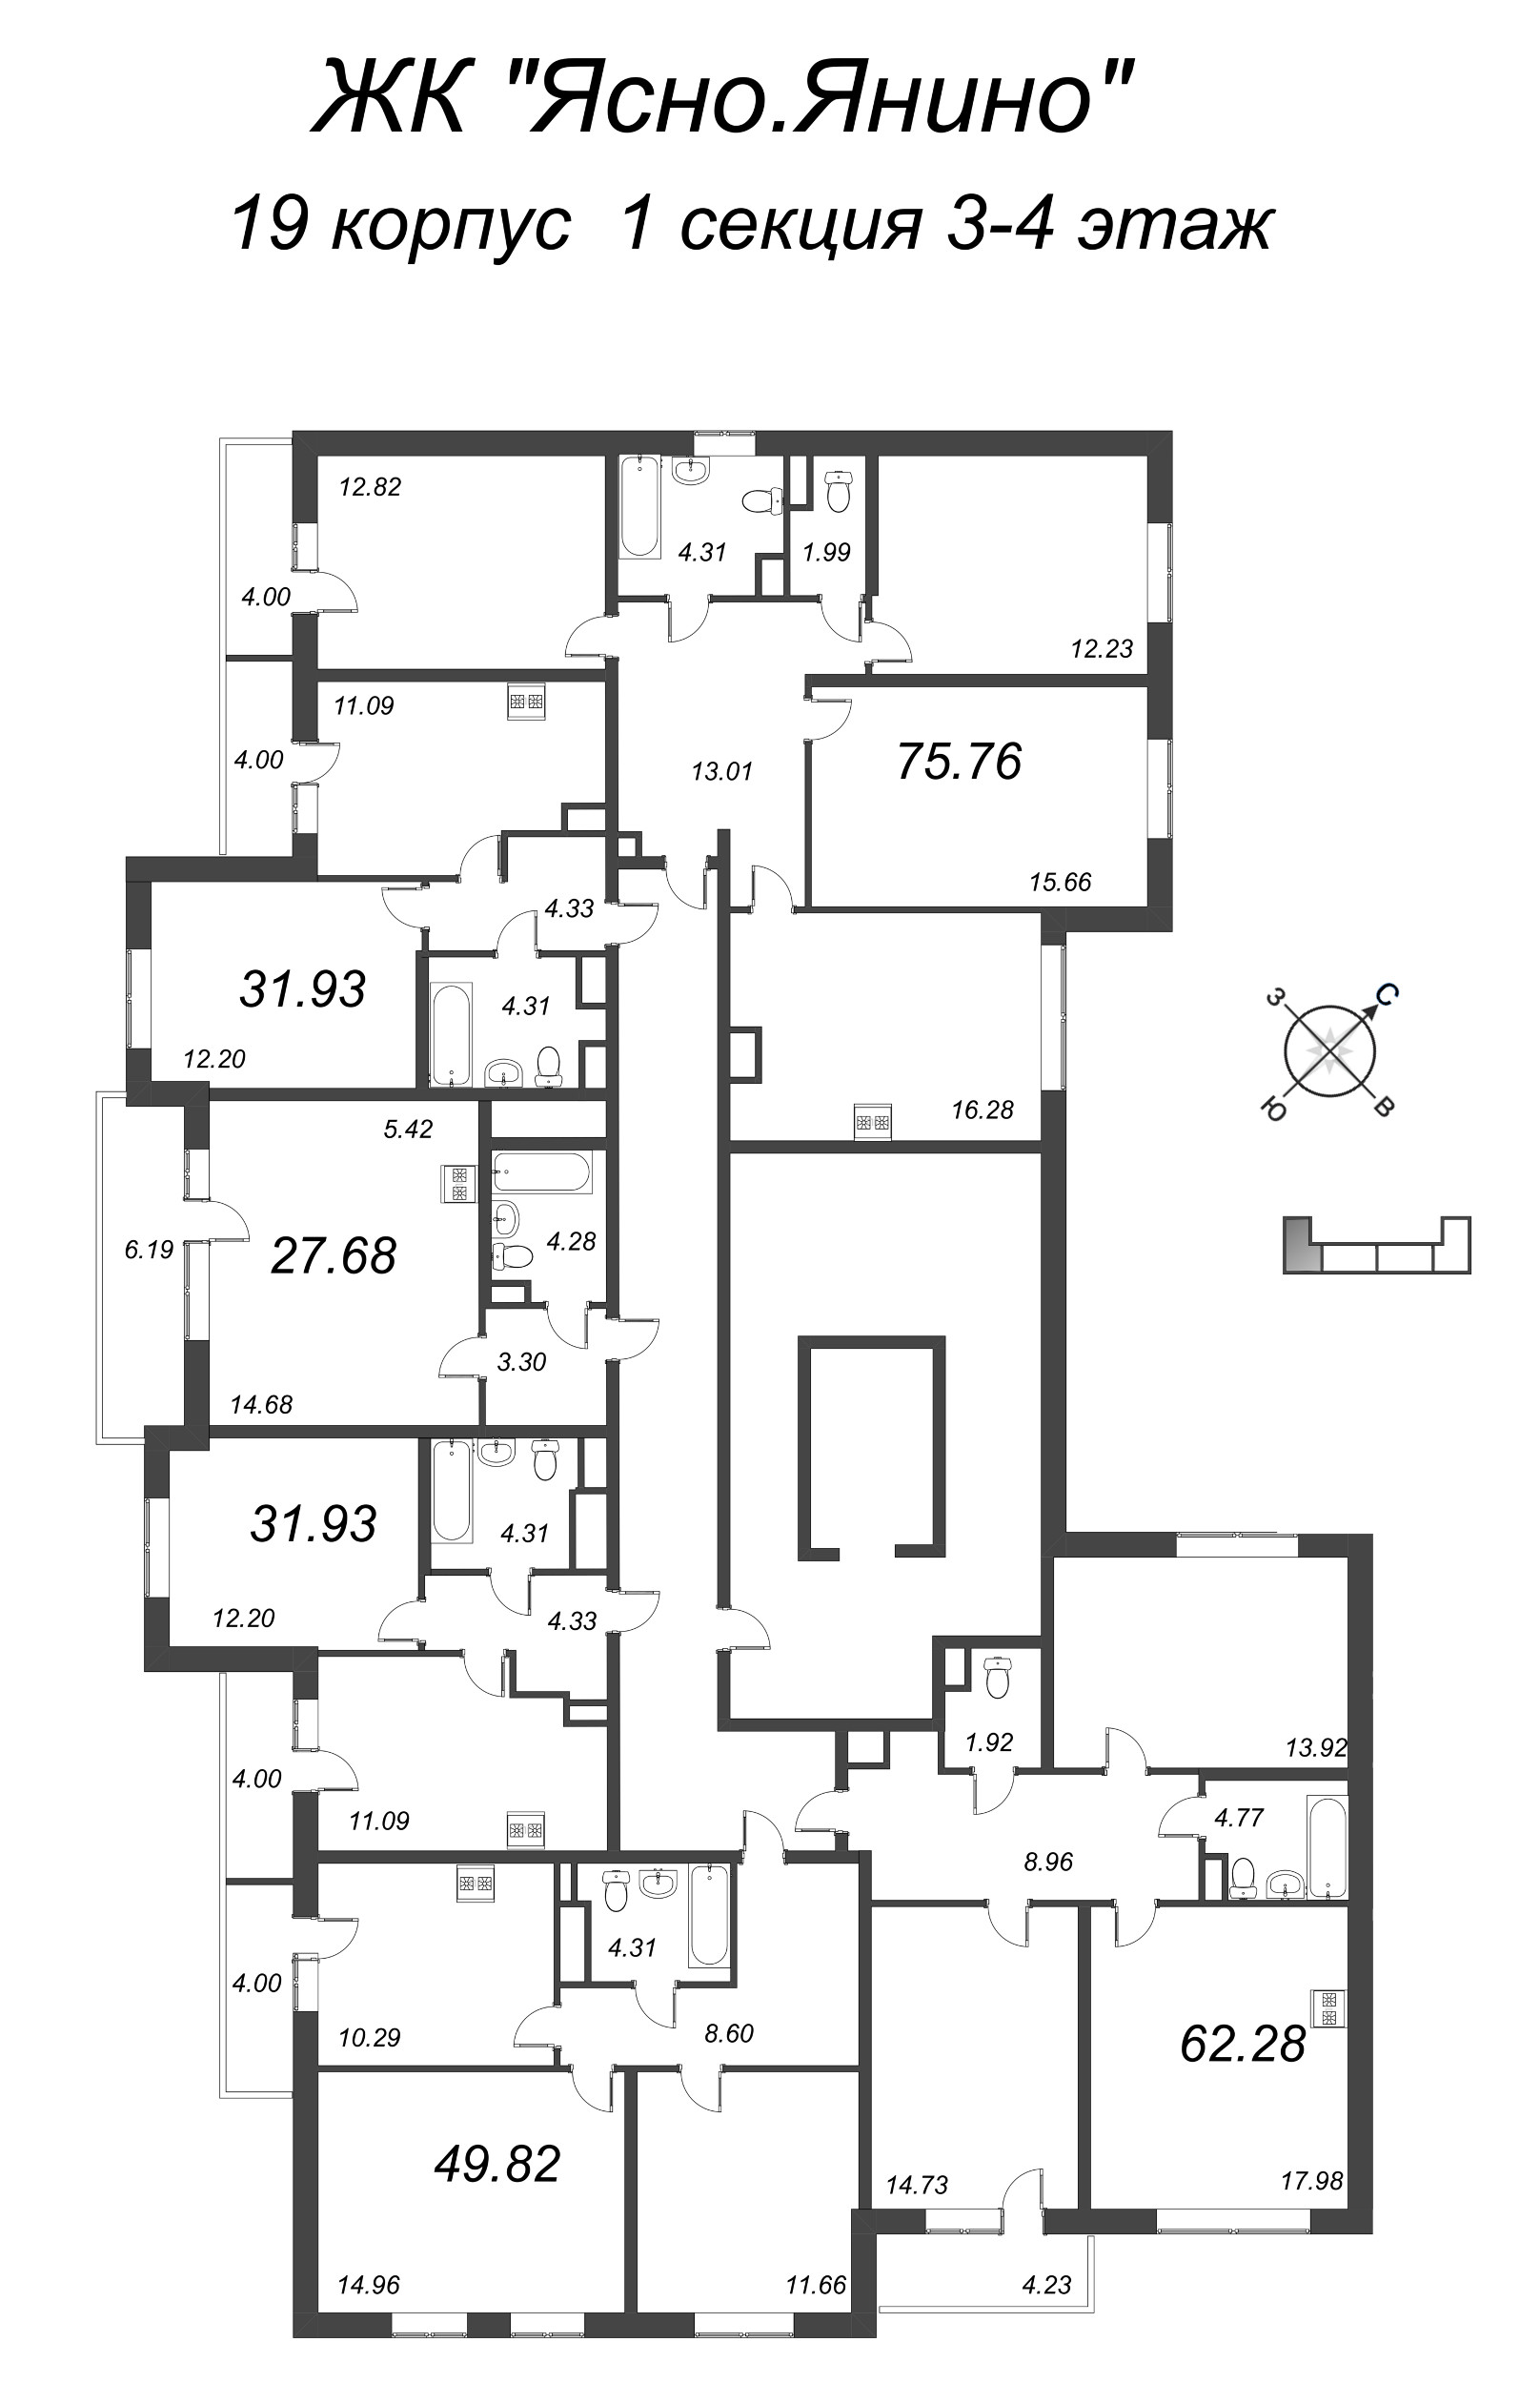 4-комнатная (Евро) квартира, 75.76 м² - планировка этажа